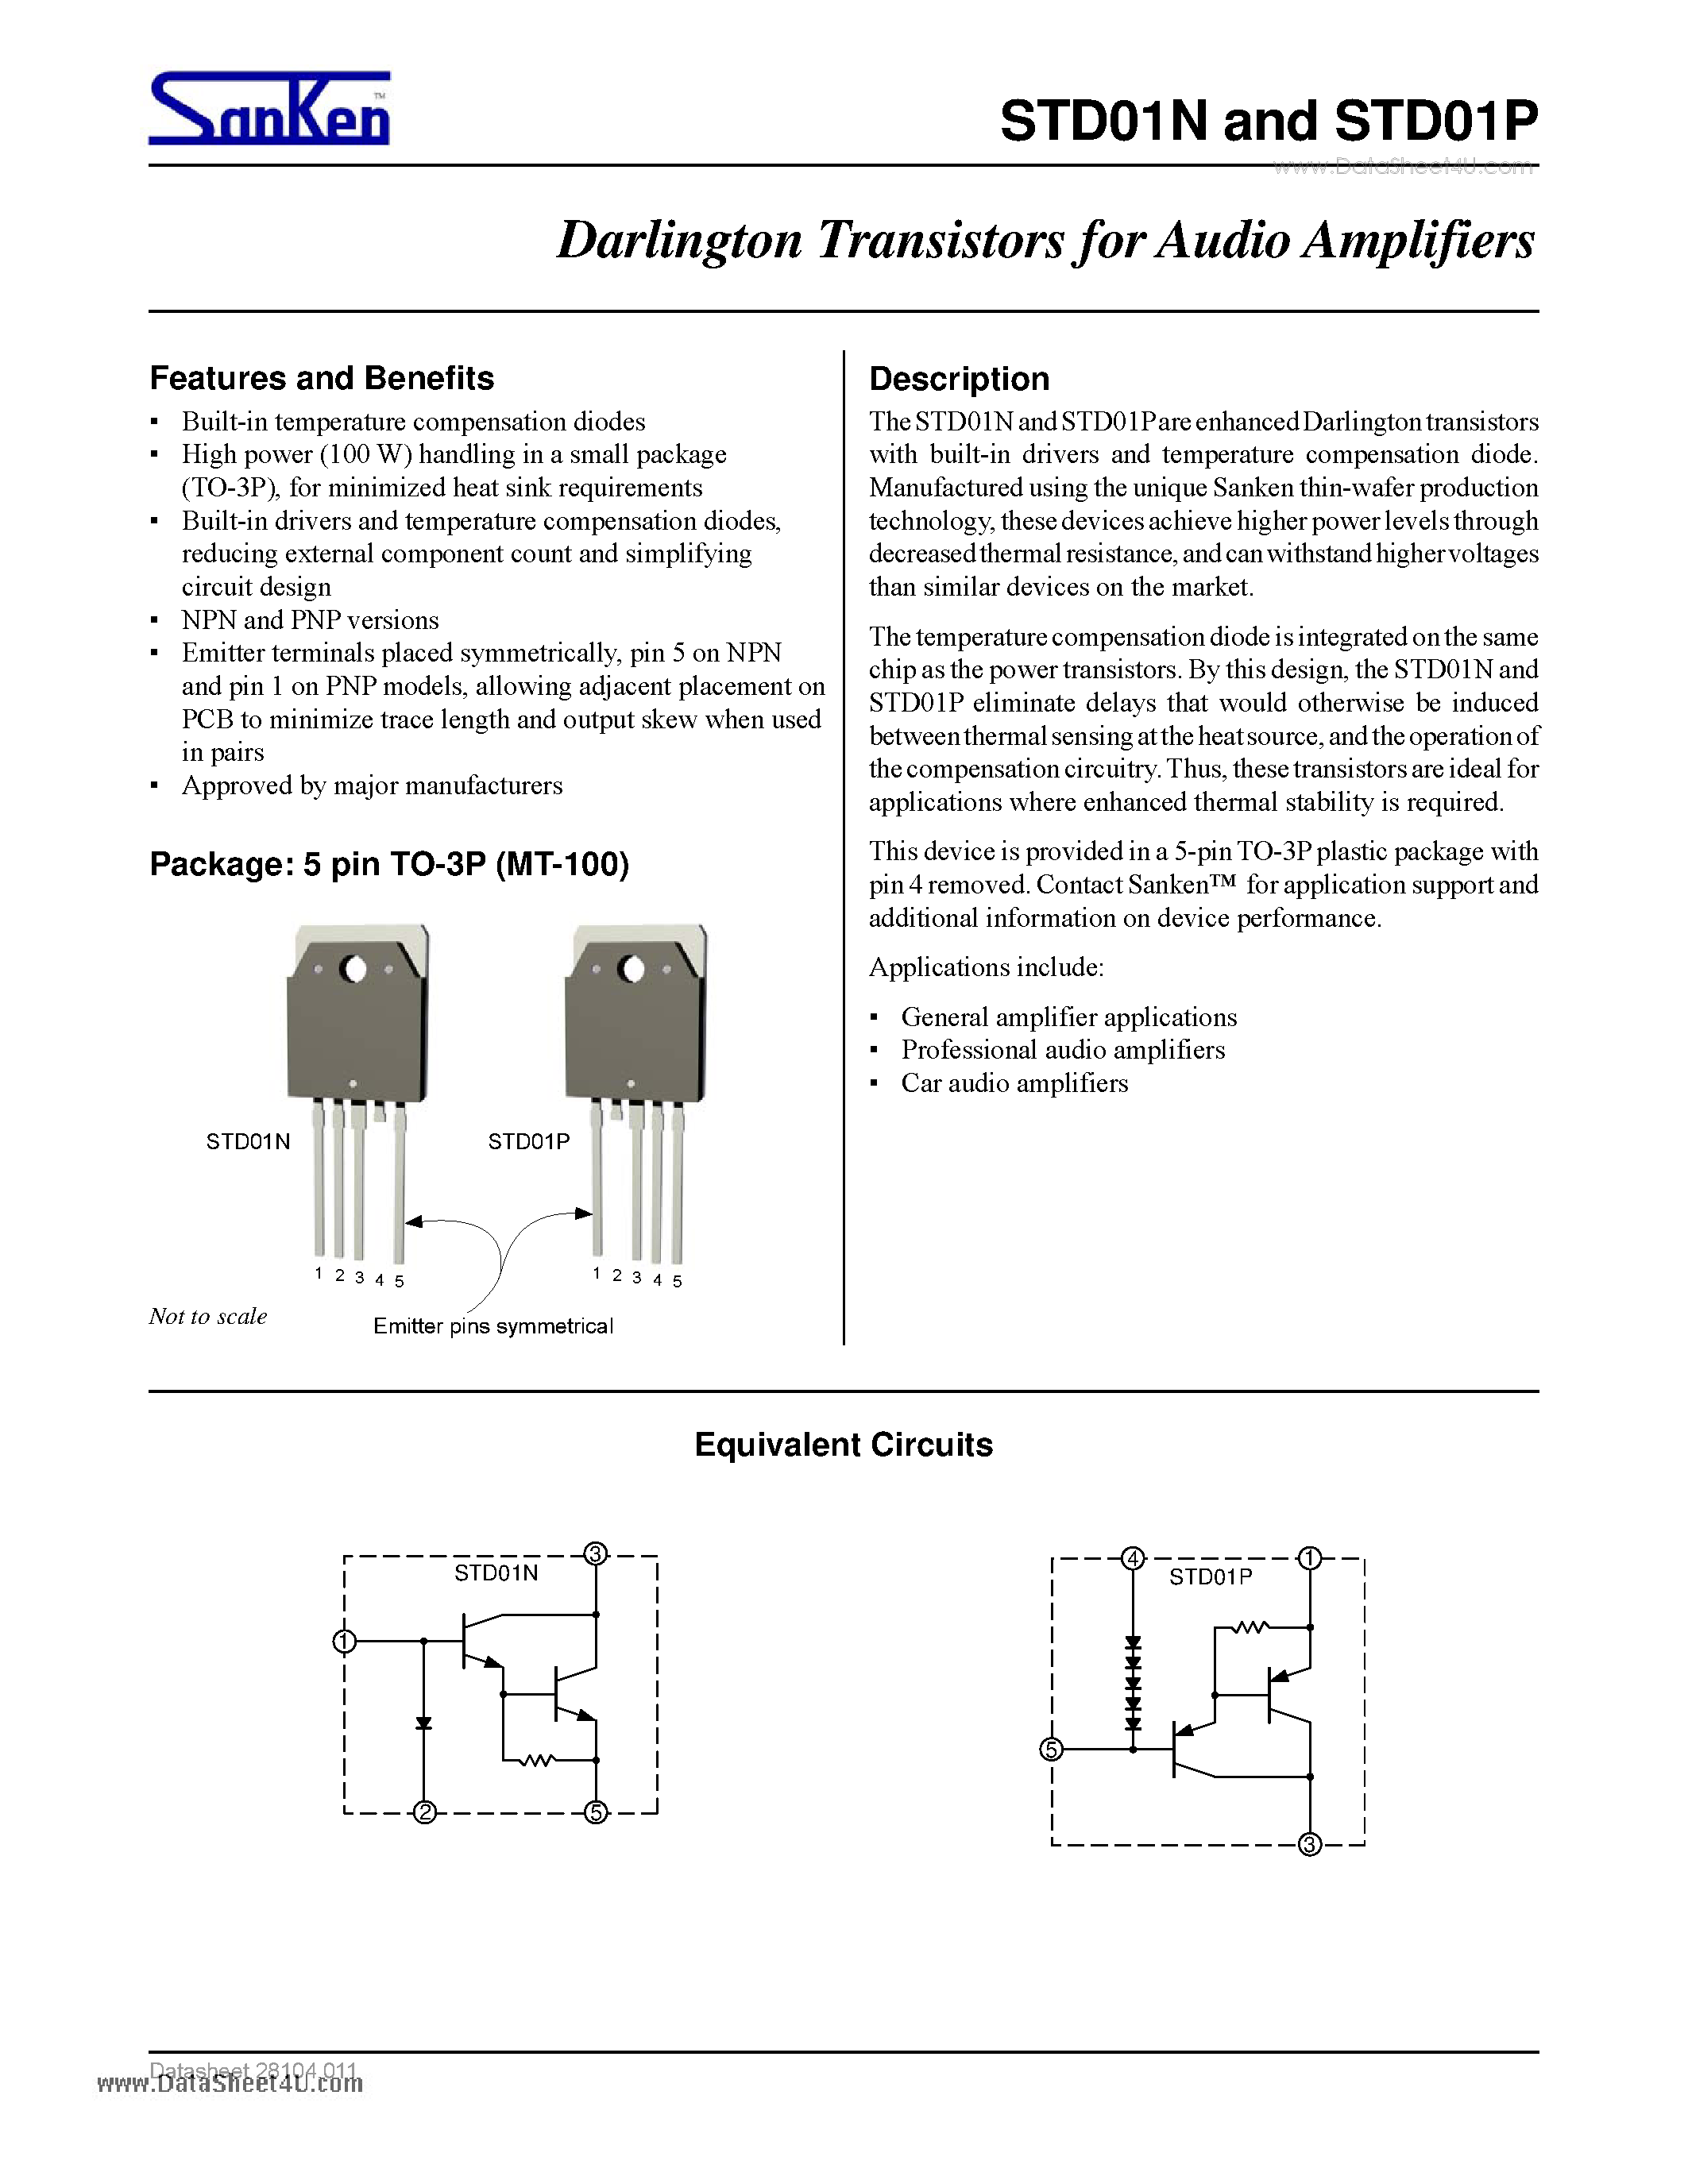 Даташит STD01N - Darlington Transistors for Audio Amplifiers страница 1